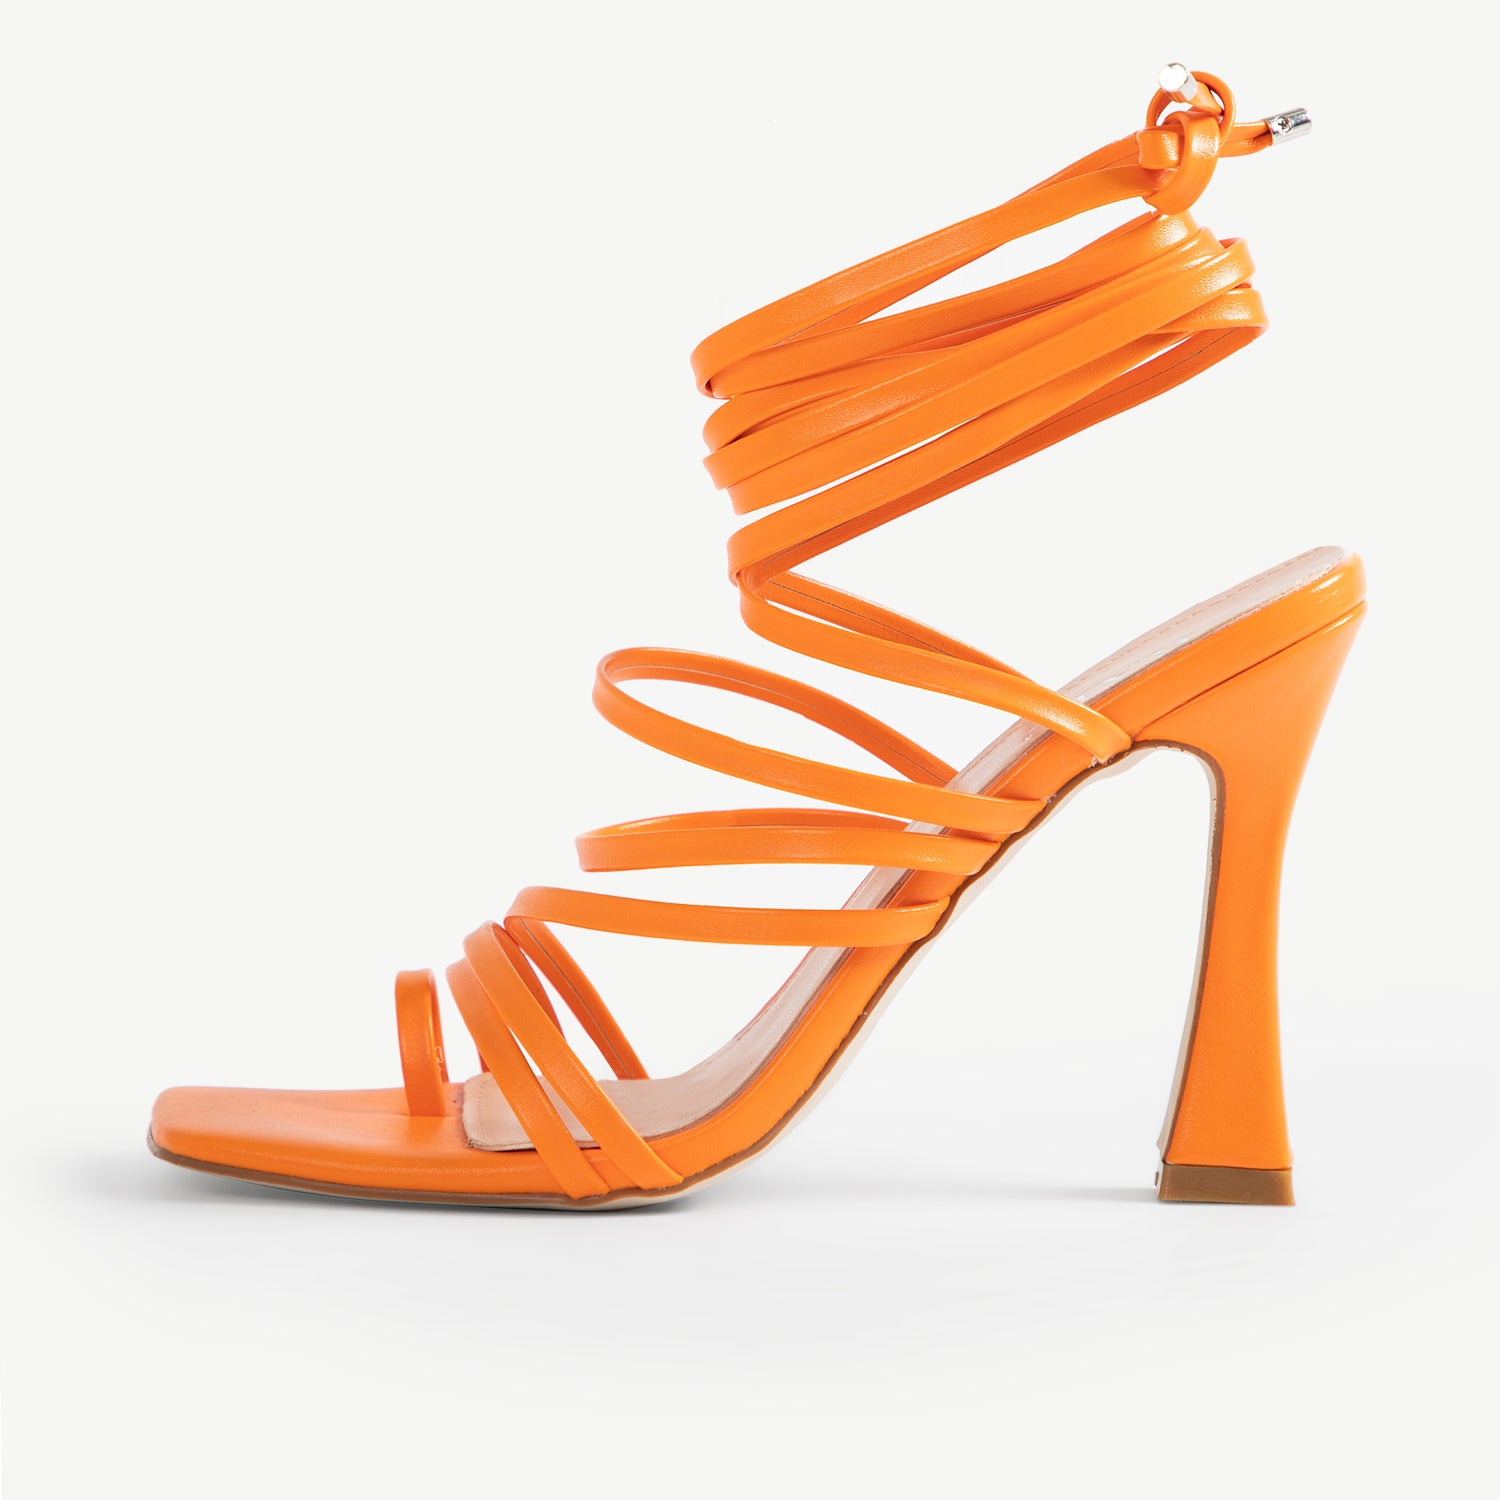 RAID Credence Lace Up Heel in Orange